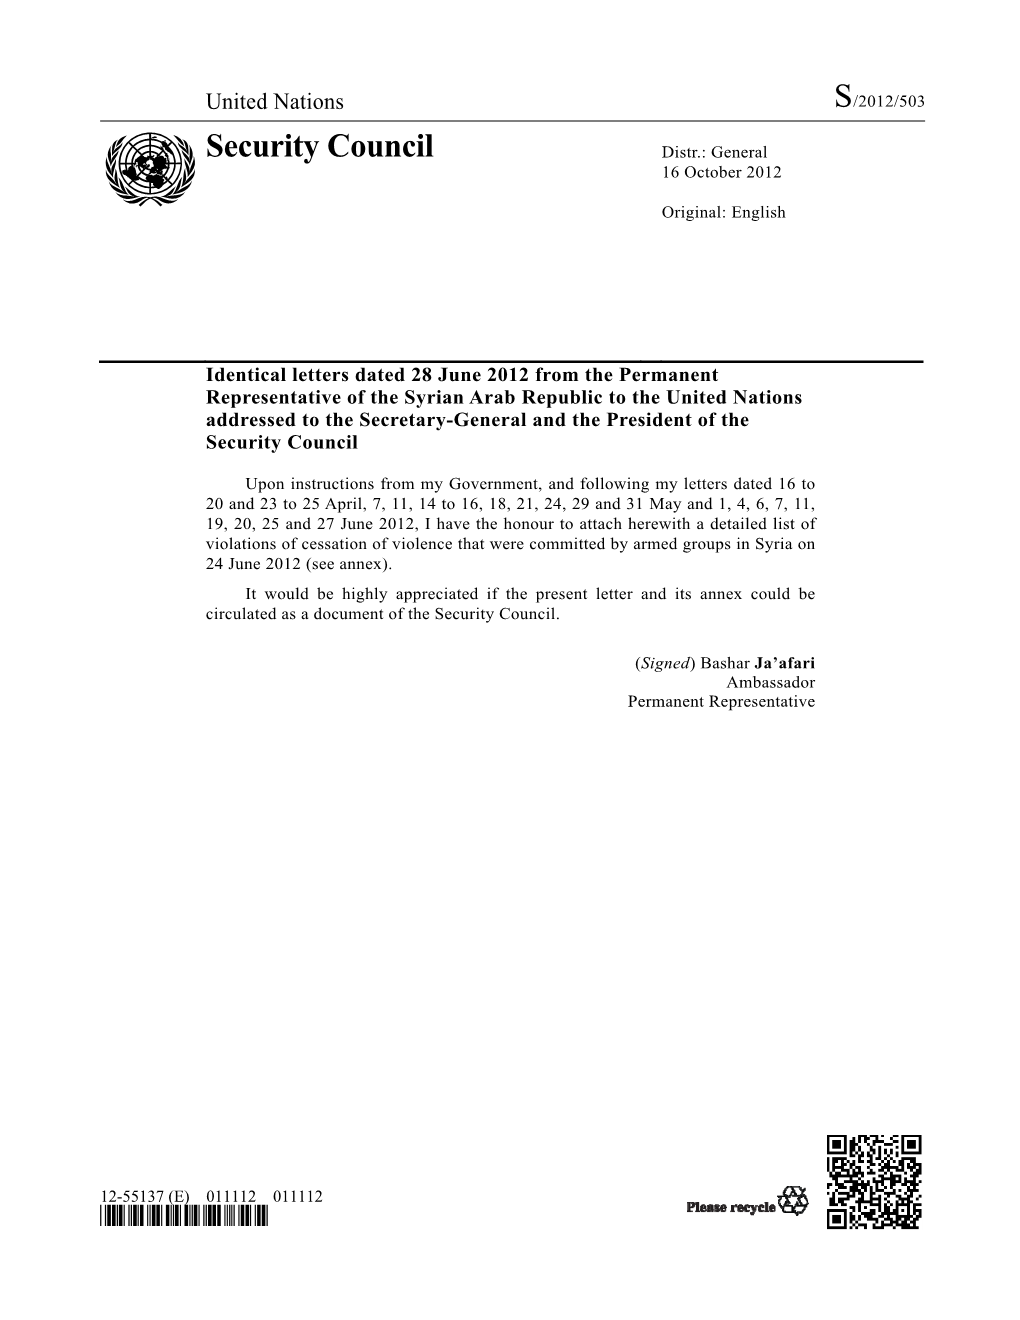 Security Council Distr.: General 16 October 2012